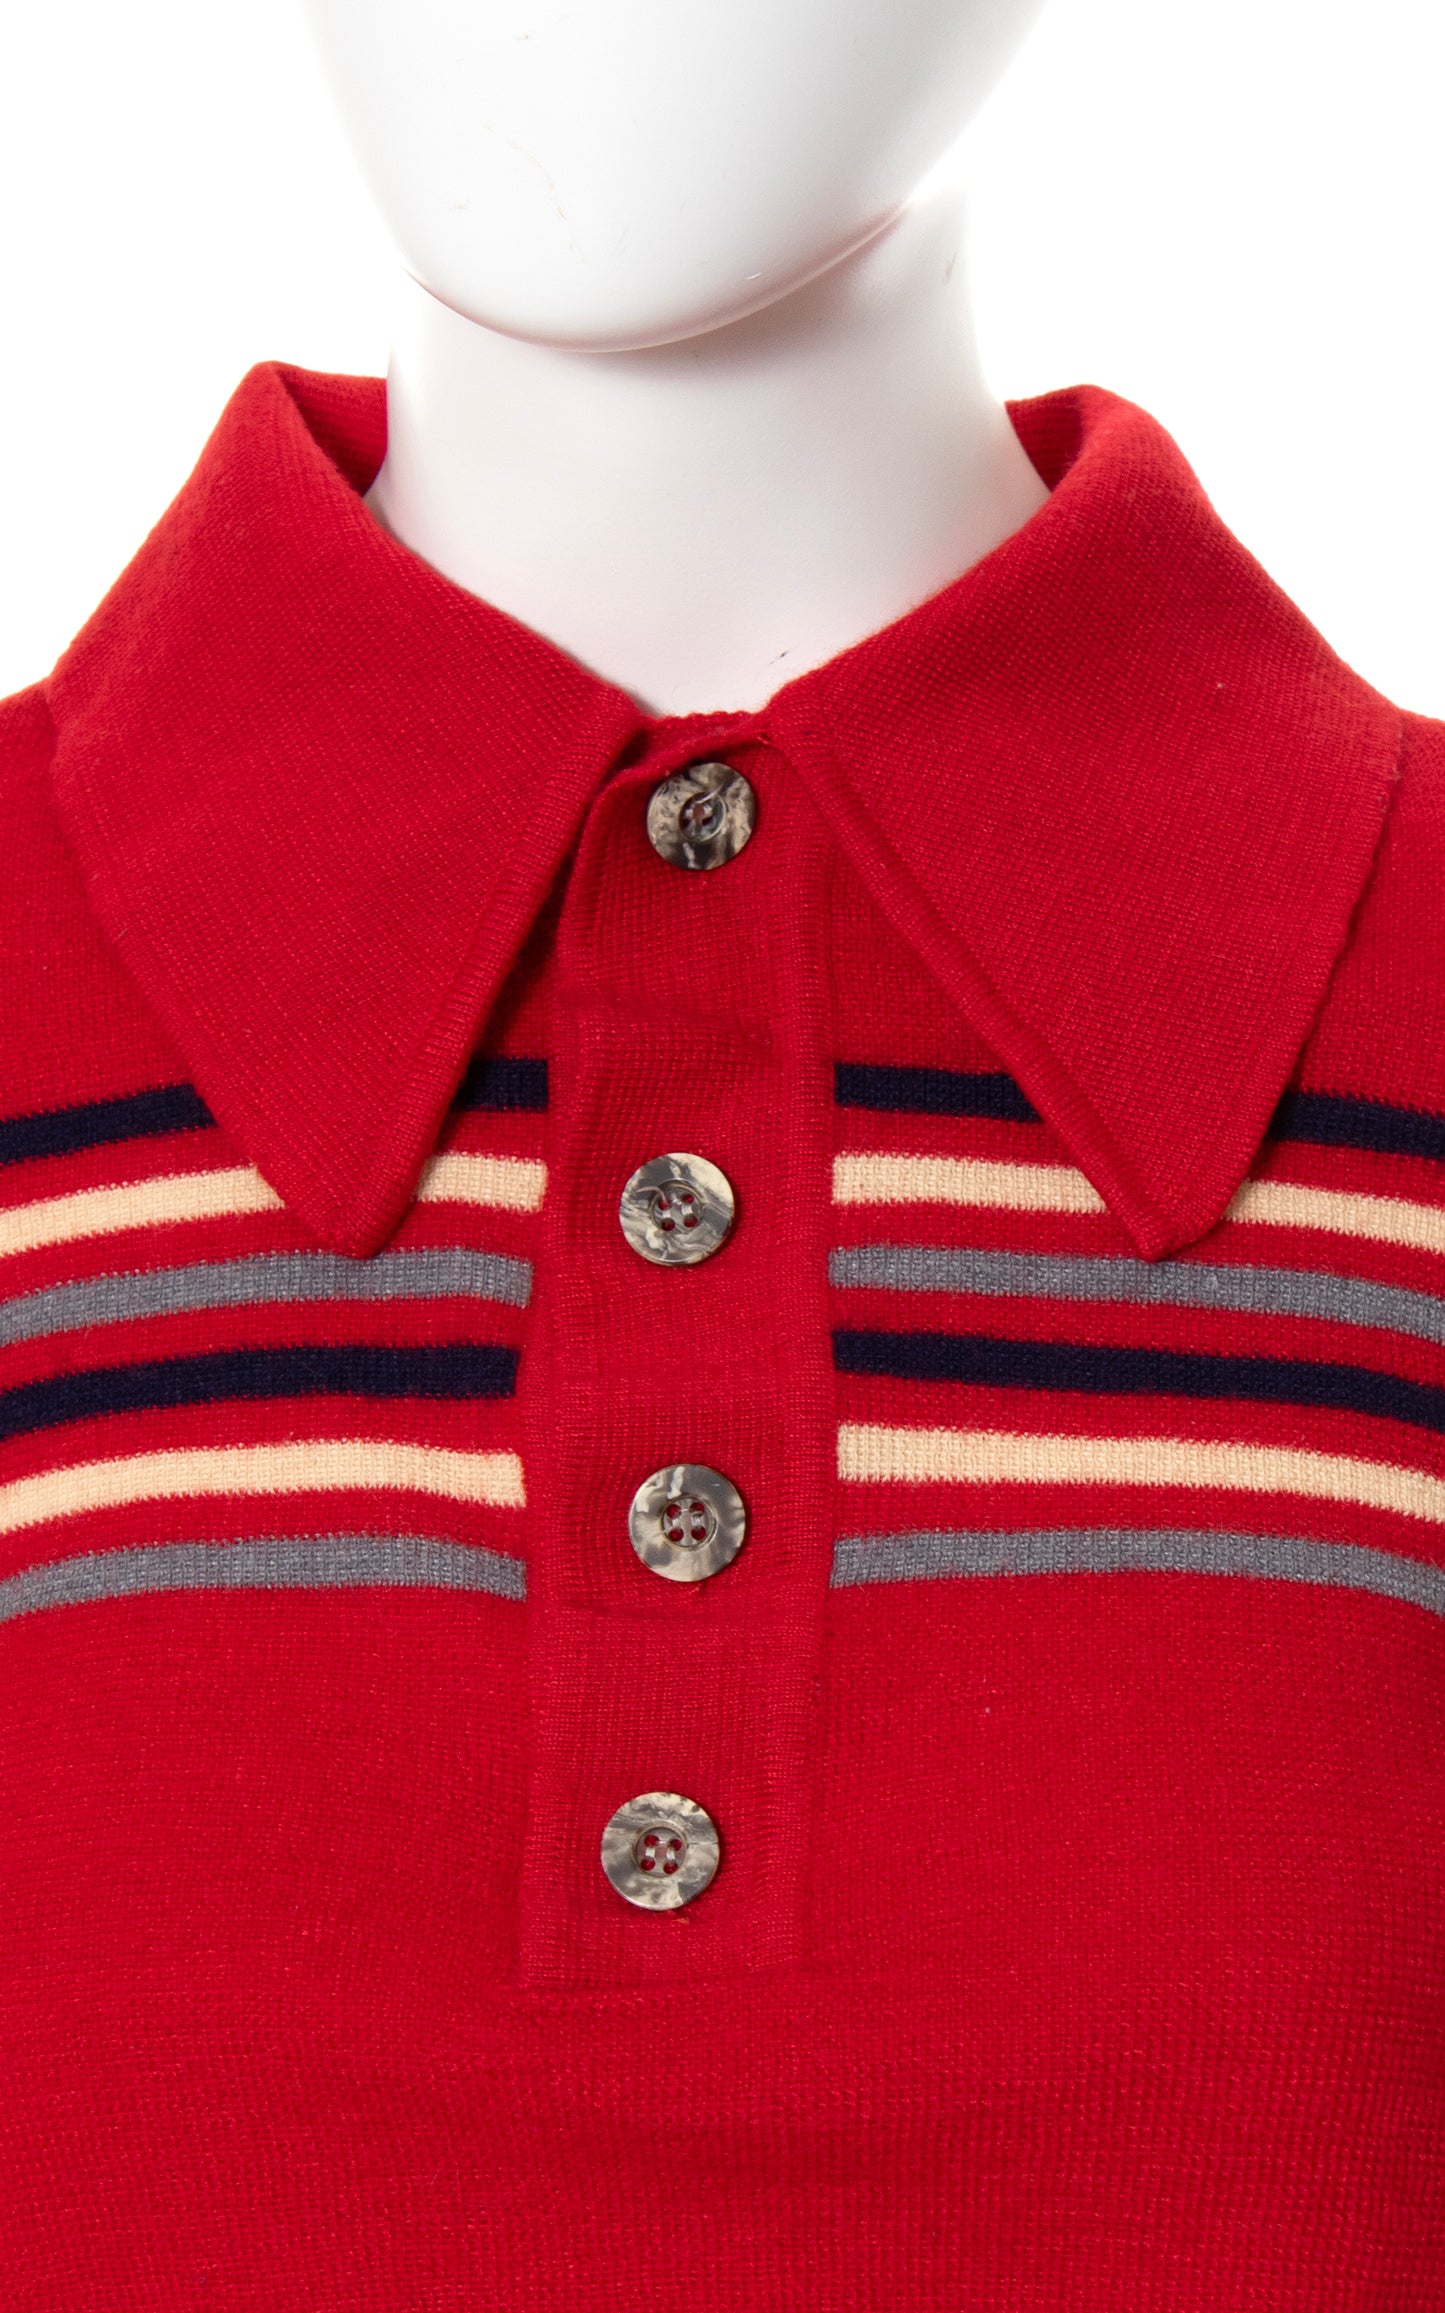 1970s Striped Knit Wool Sweater | x-small/small